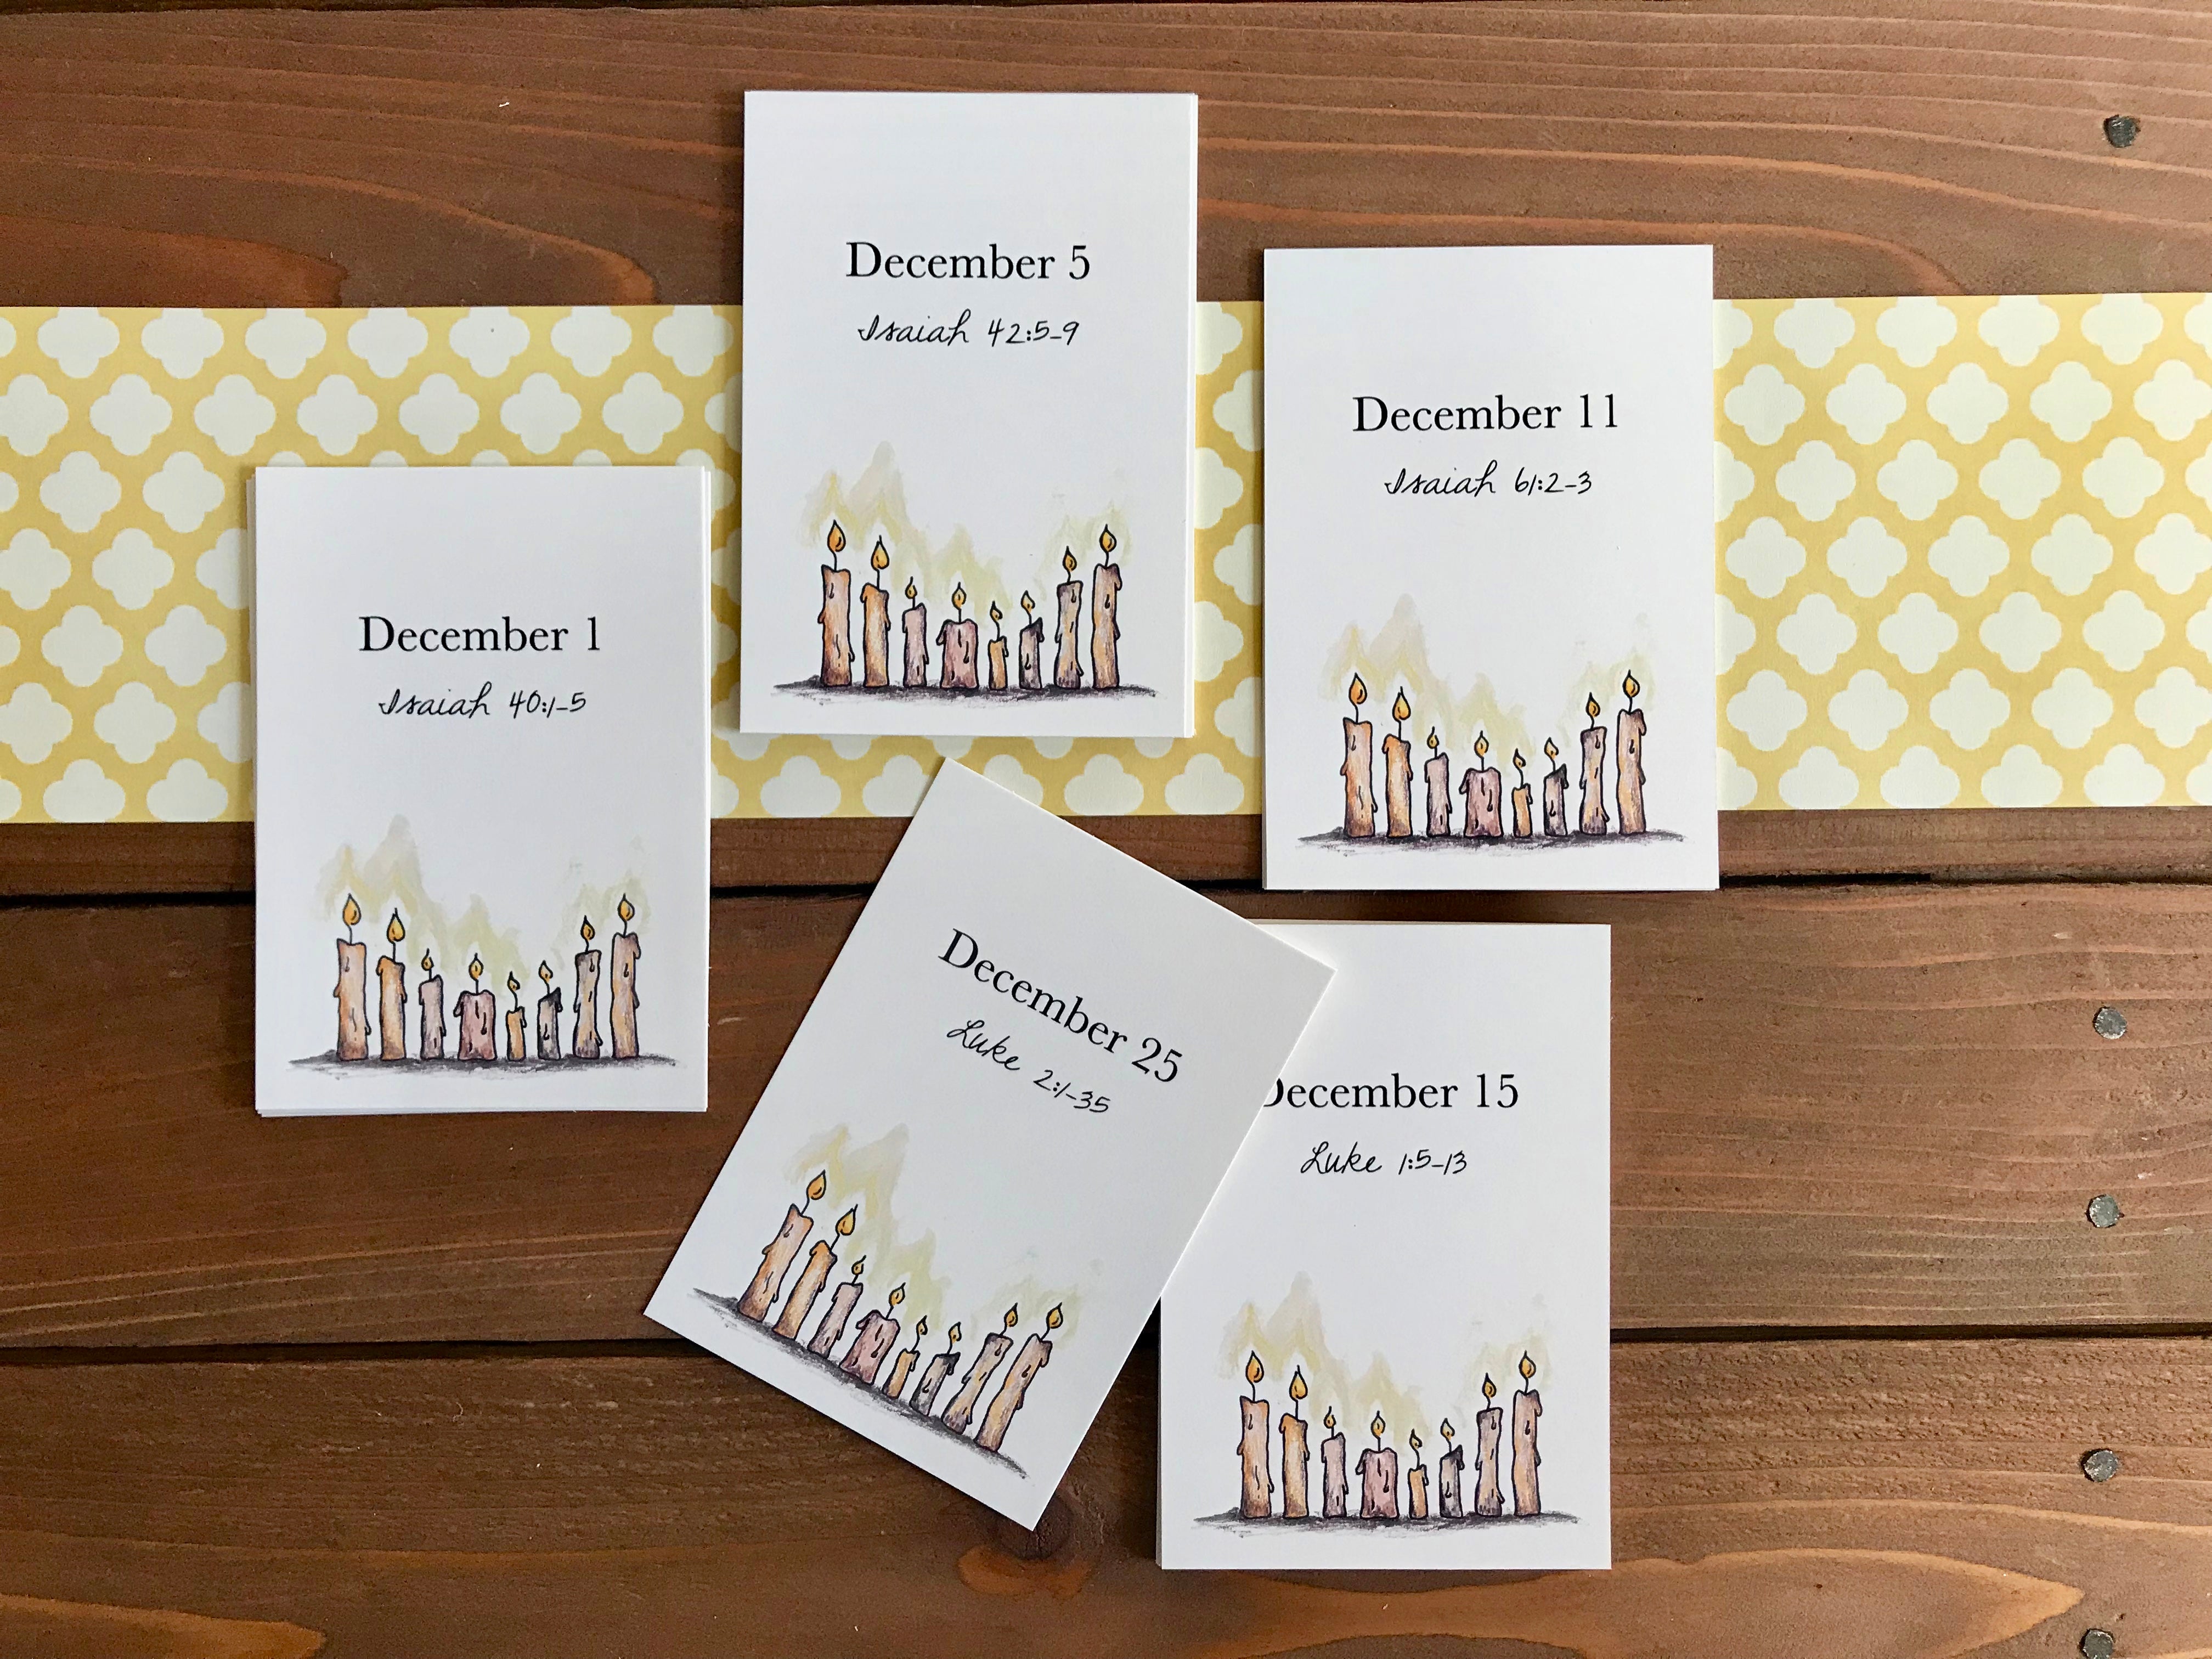 PRINTABLE Scripture Advent Calendar Card Deck | PDF Digital Download